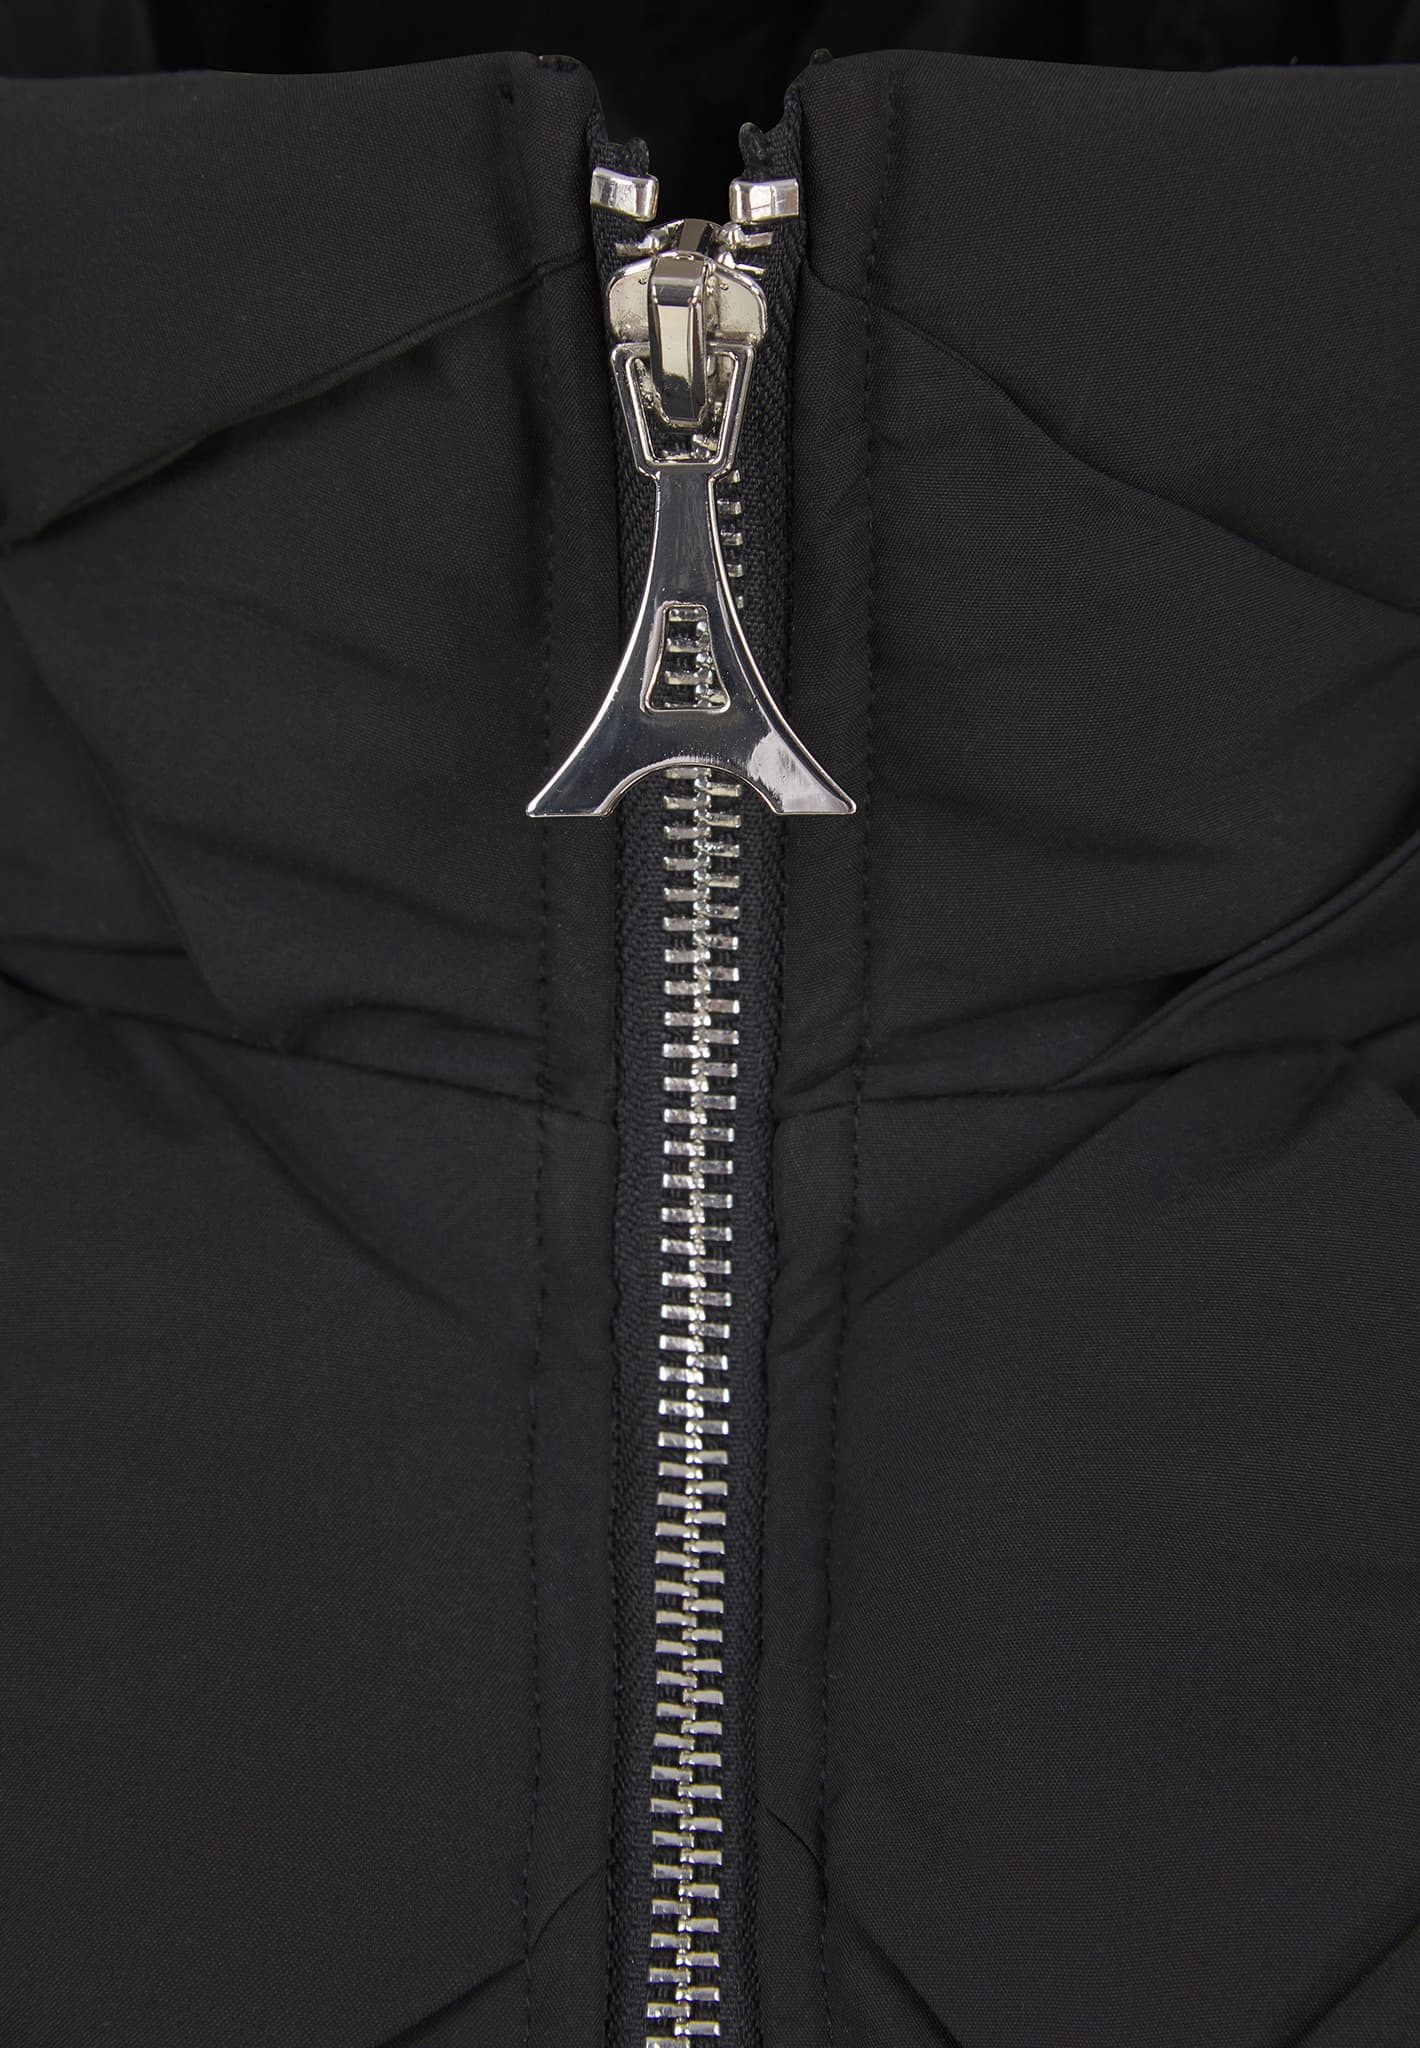 woven-interlock-puffer-jacket-black-1